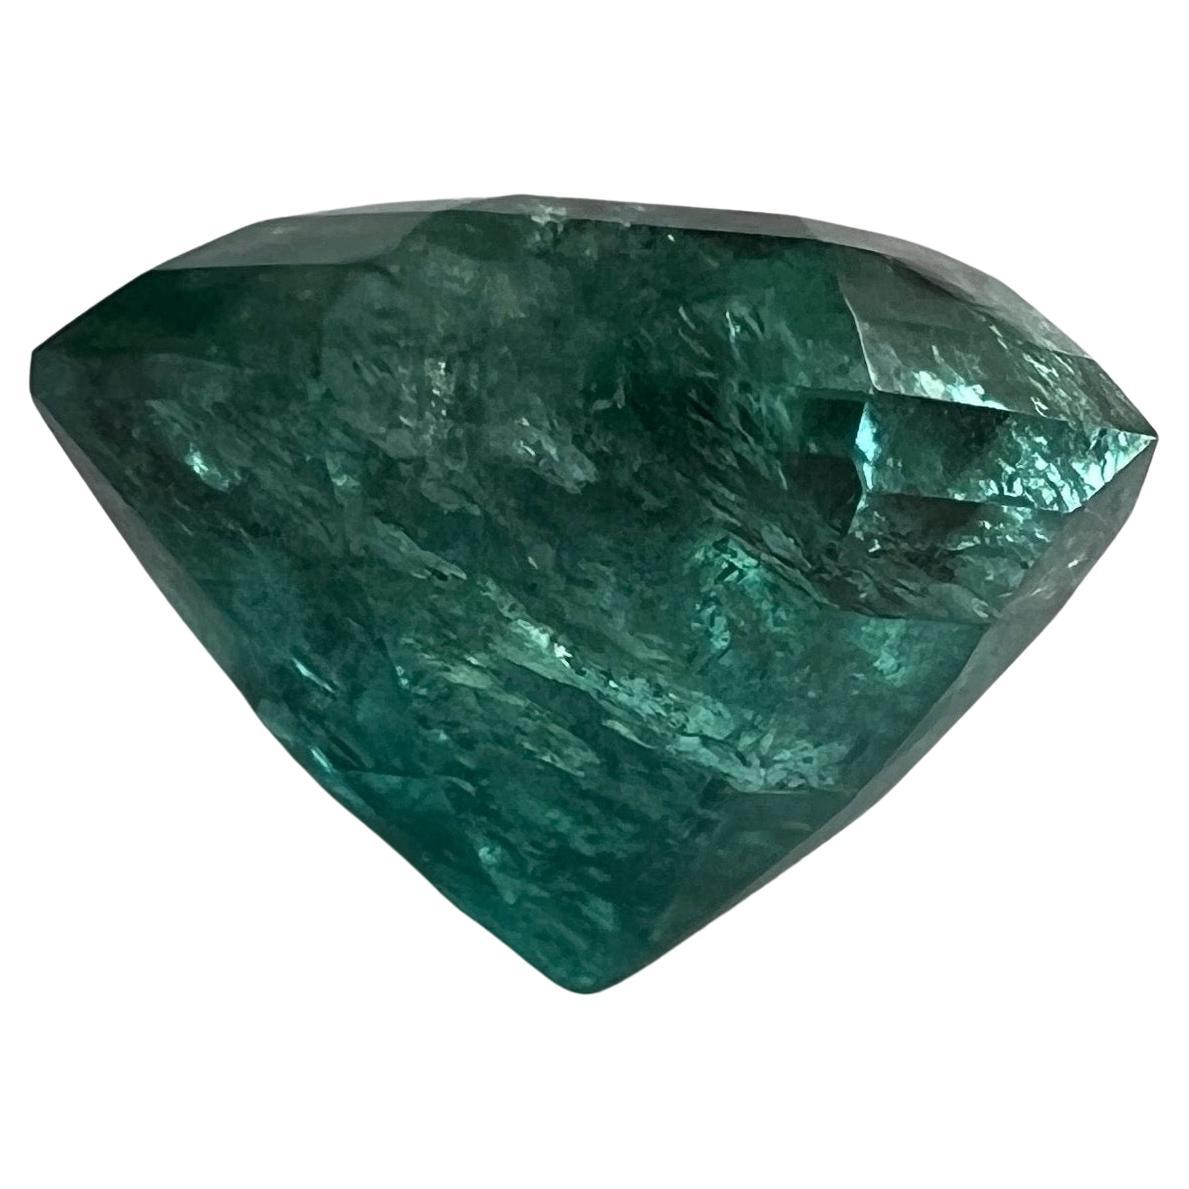 8.85ct Asscher Cut No-Oil Natural Untreated Emerald Gemstone For Sale 1